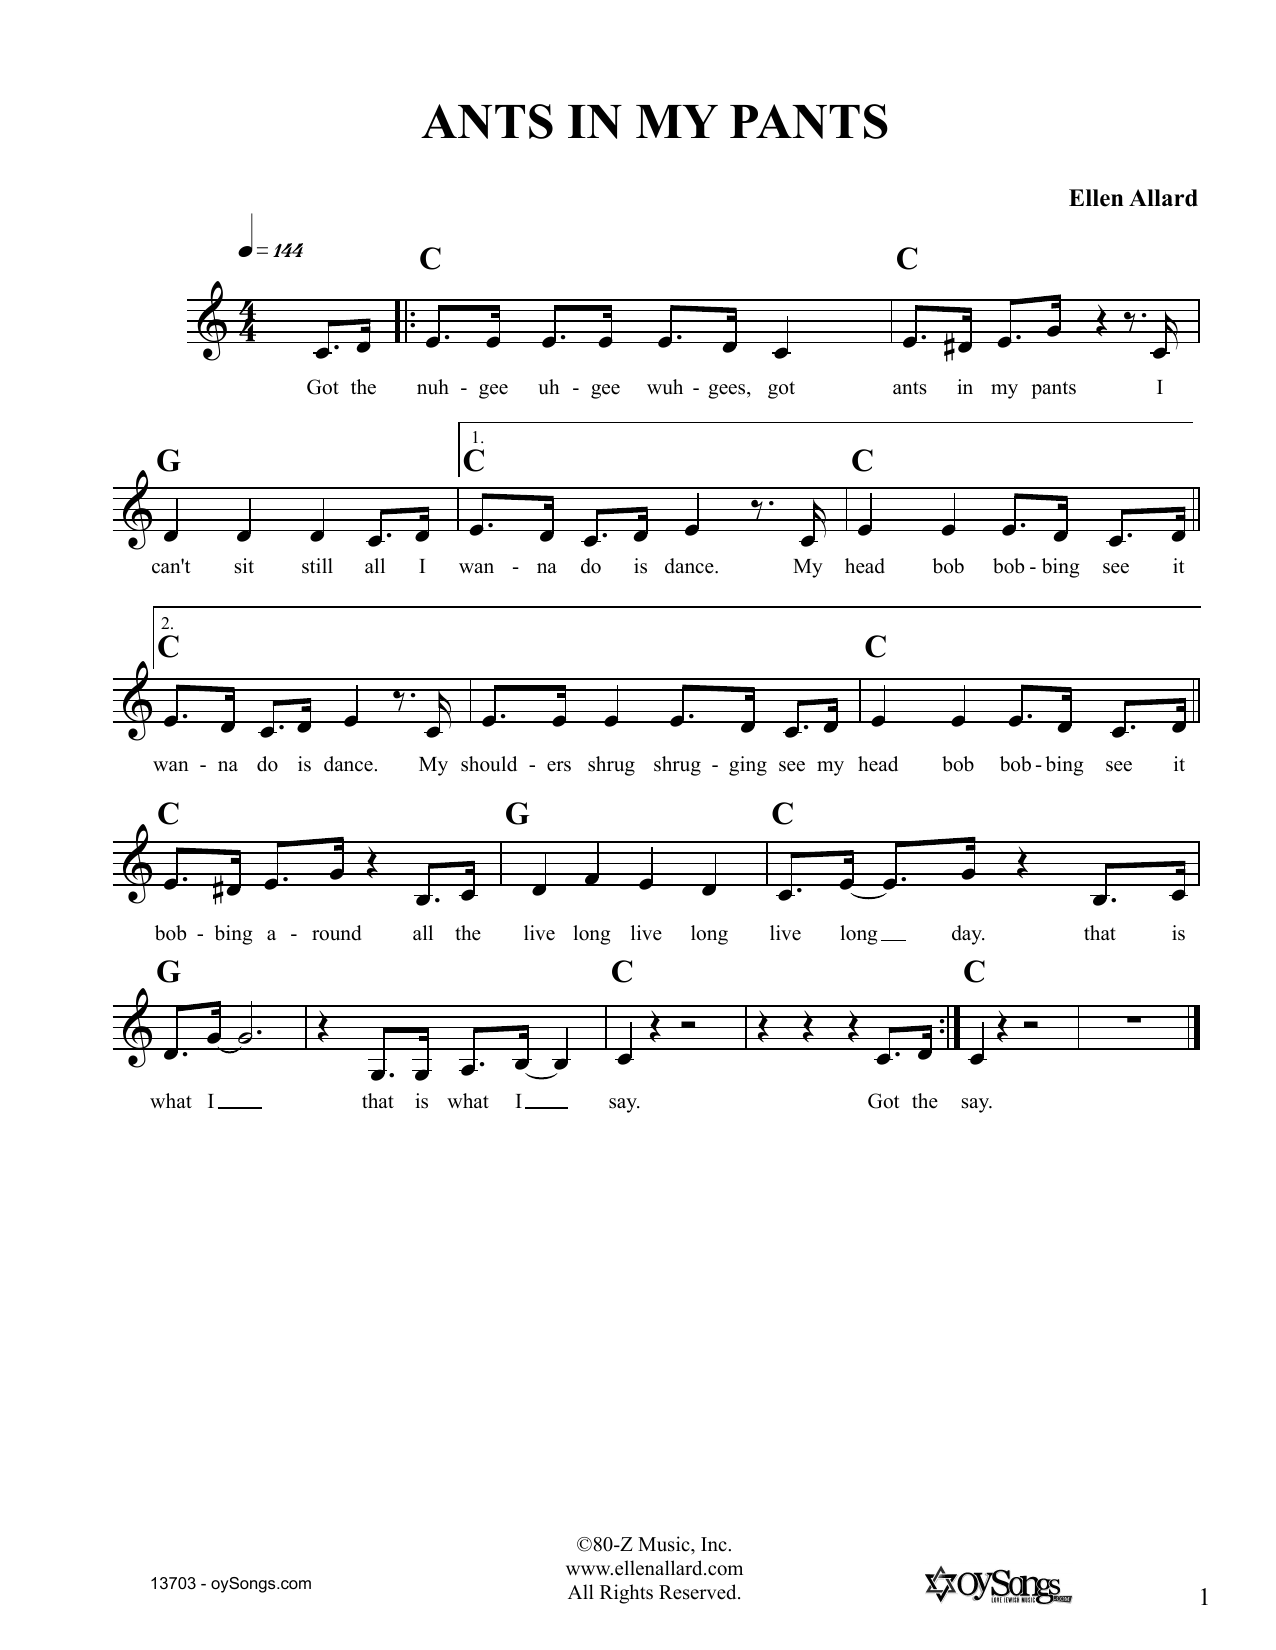 Ellen Allard Ants In My Pants Sheet Music Notes & Chords for Melody Line, Lyrics & Chords - Download or Print PDF